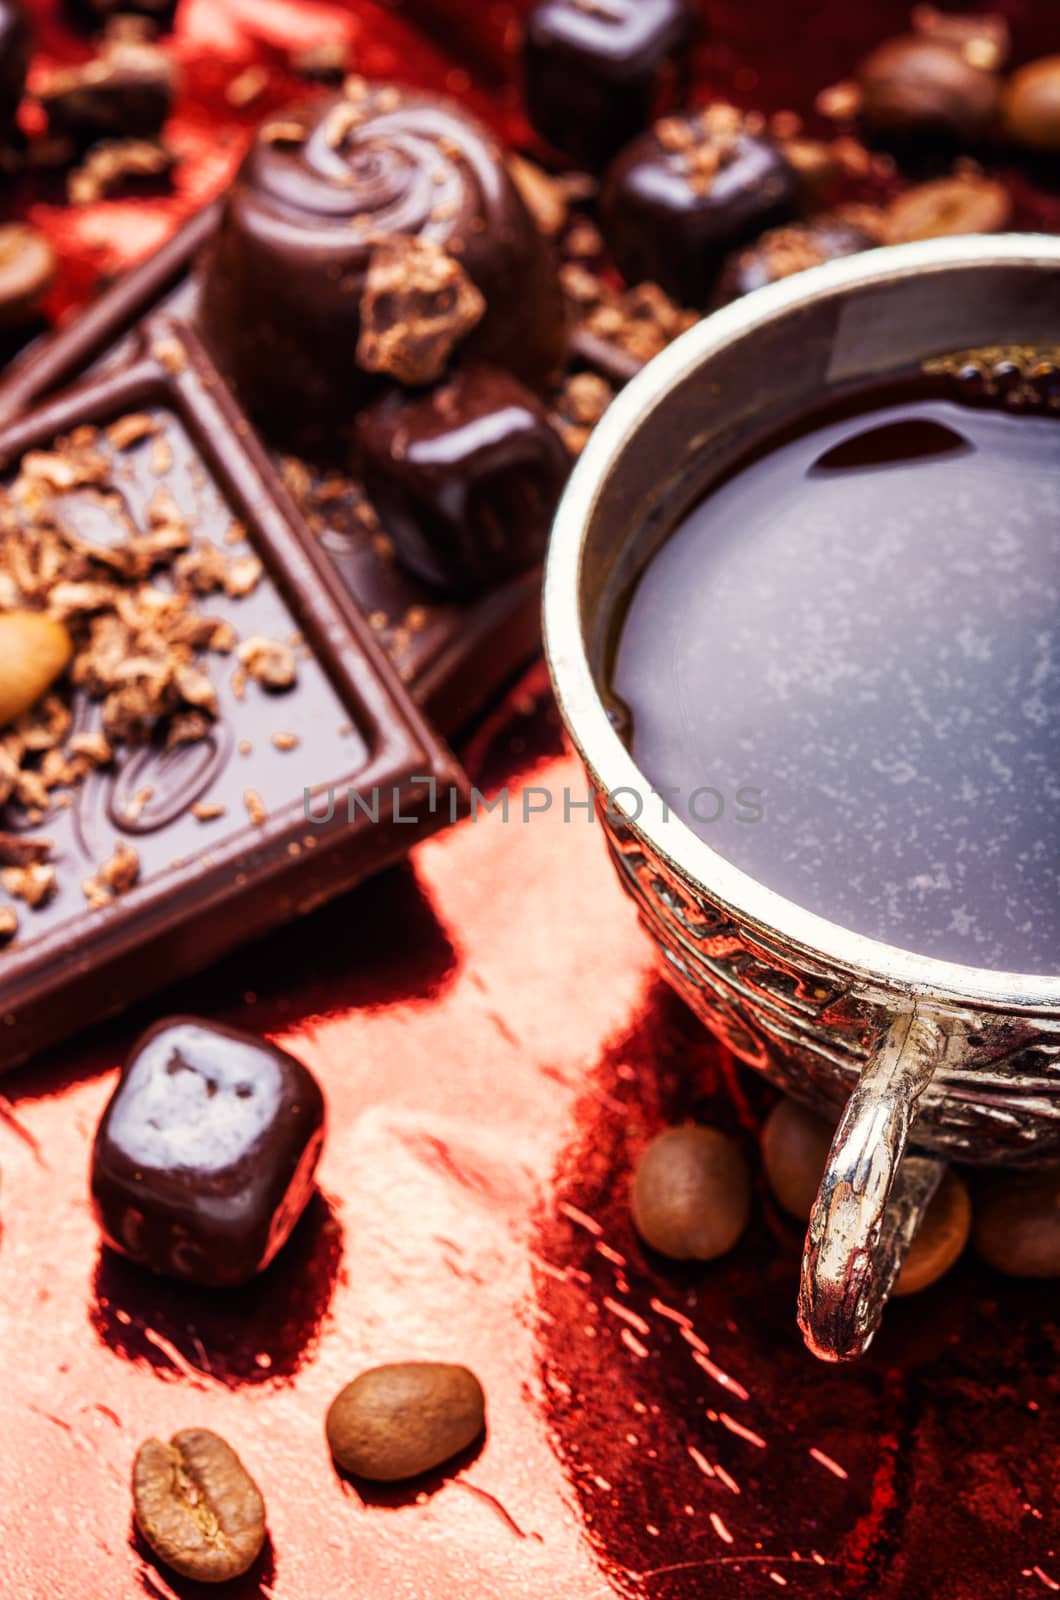 Chocolate with coffee by LMykola